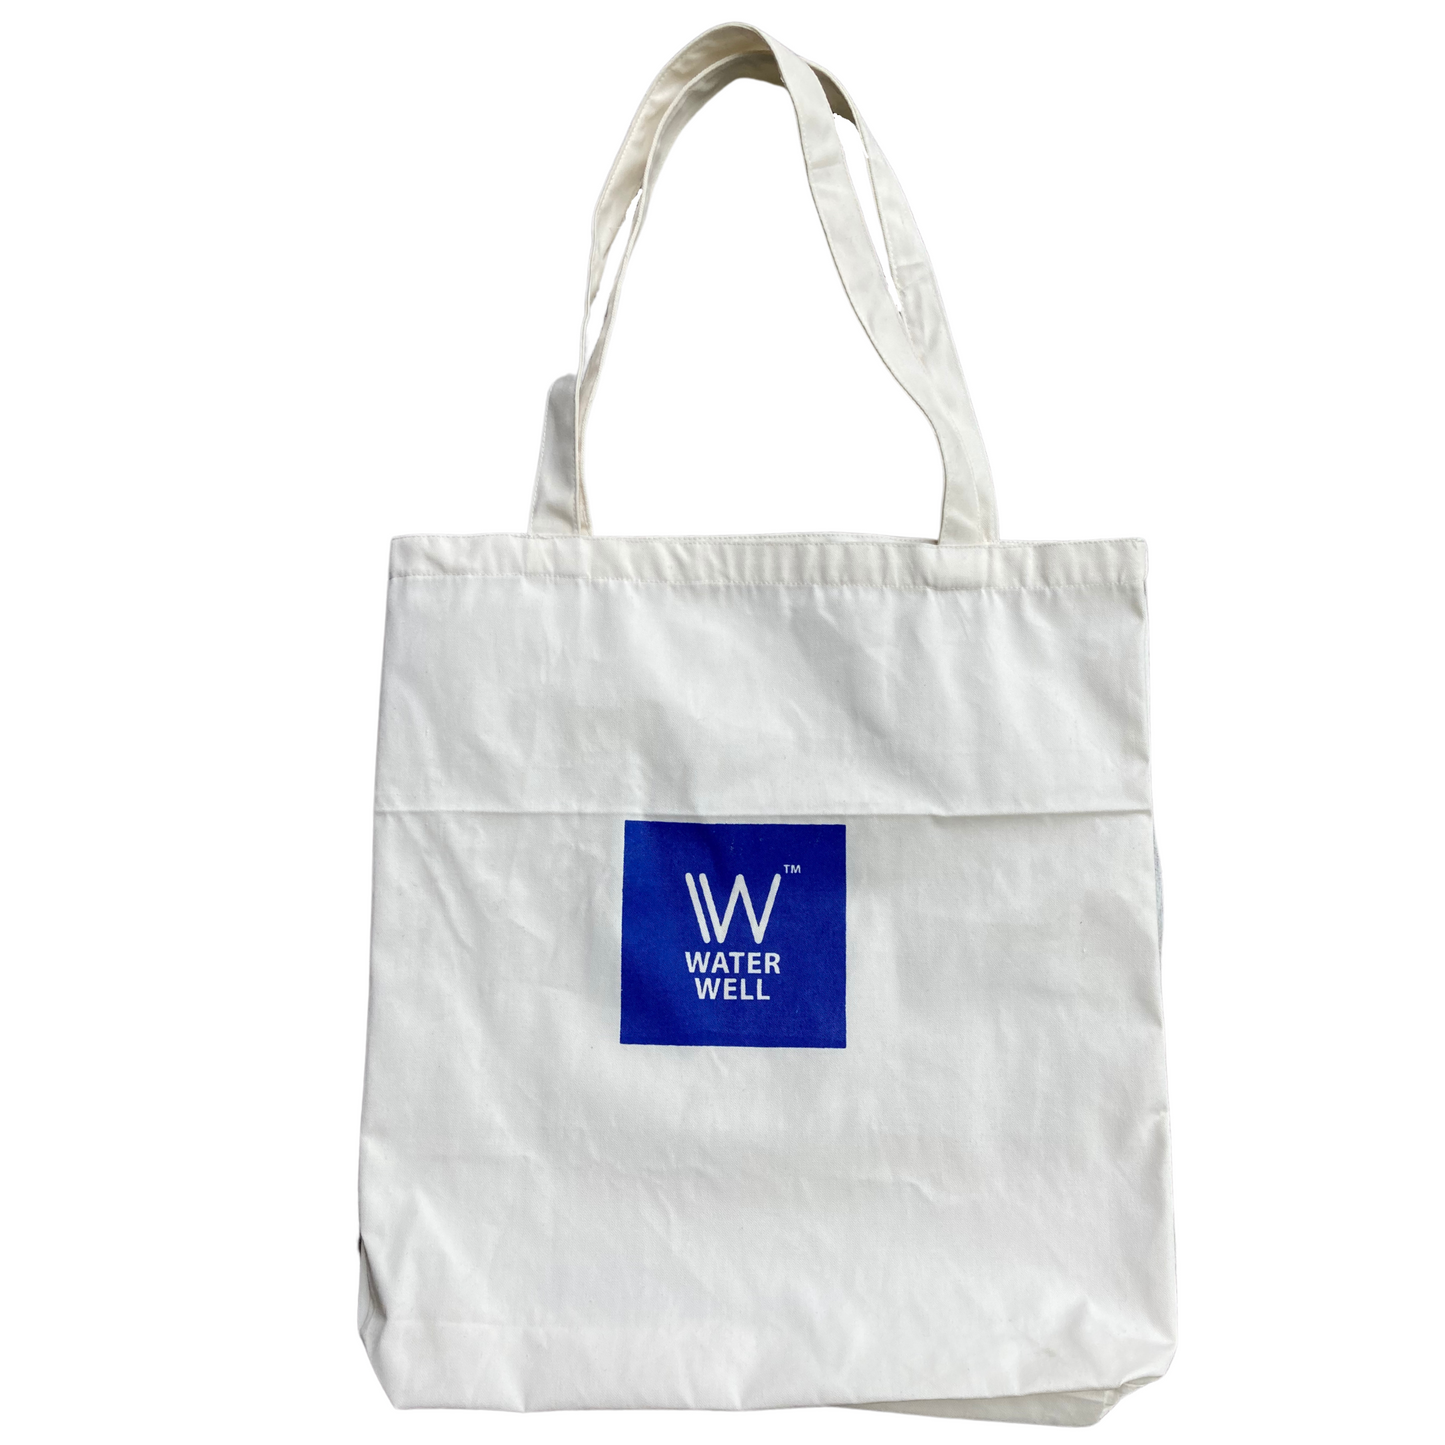 WaterWell Tote Bag